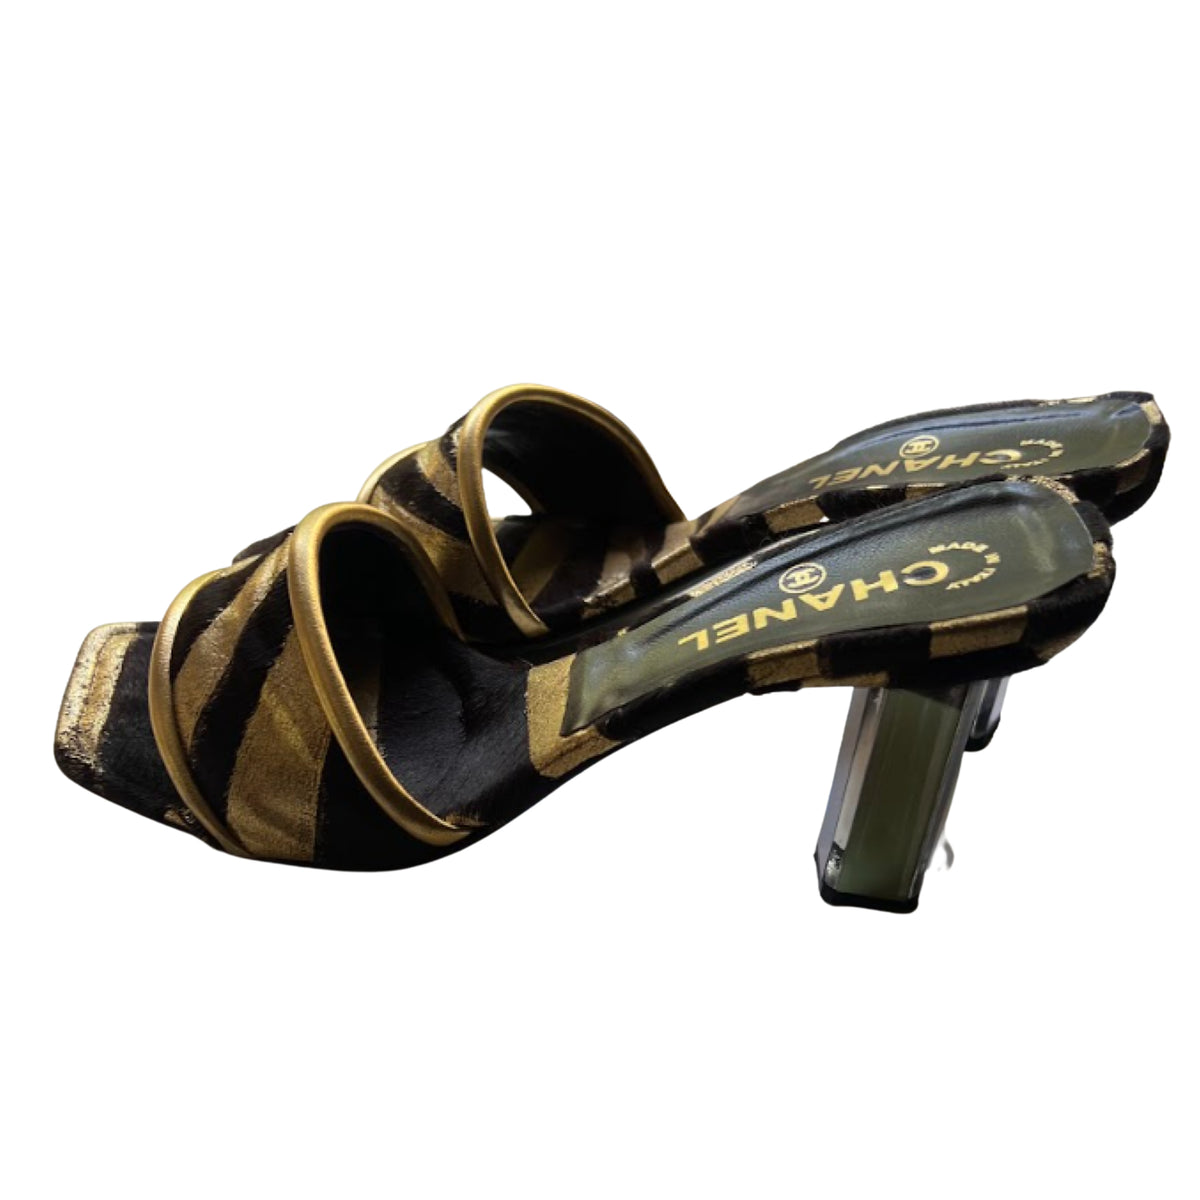 CHANEL Black and Gold Zebra Print Heels | Size 38.5